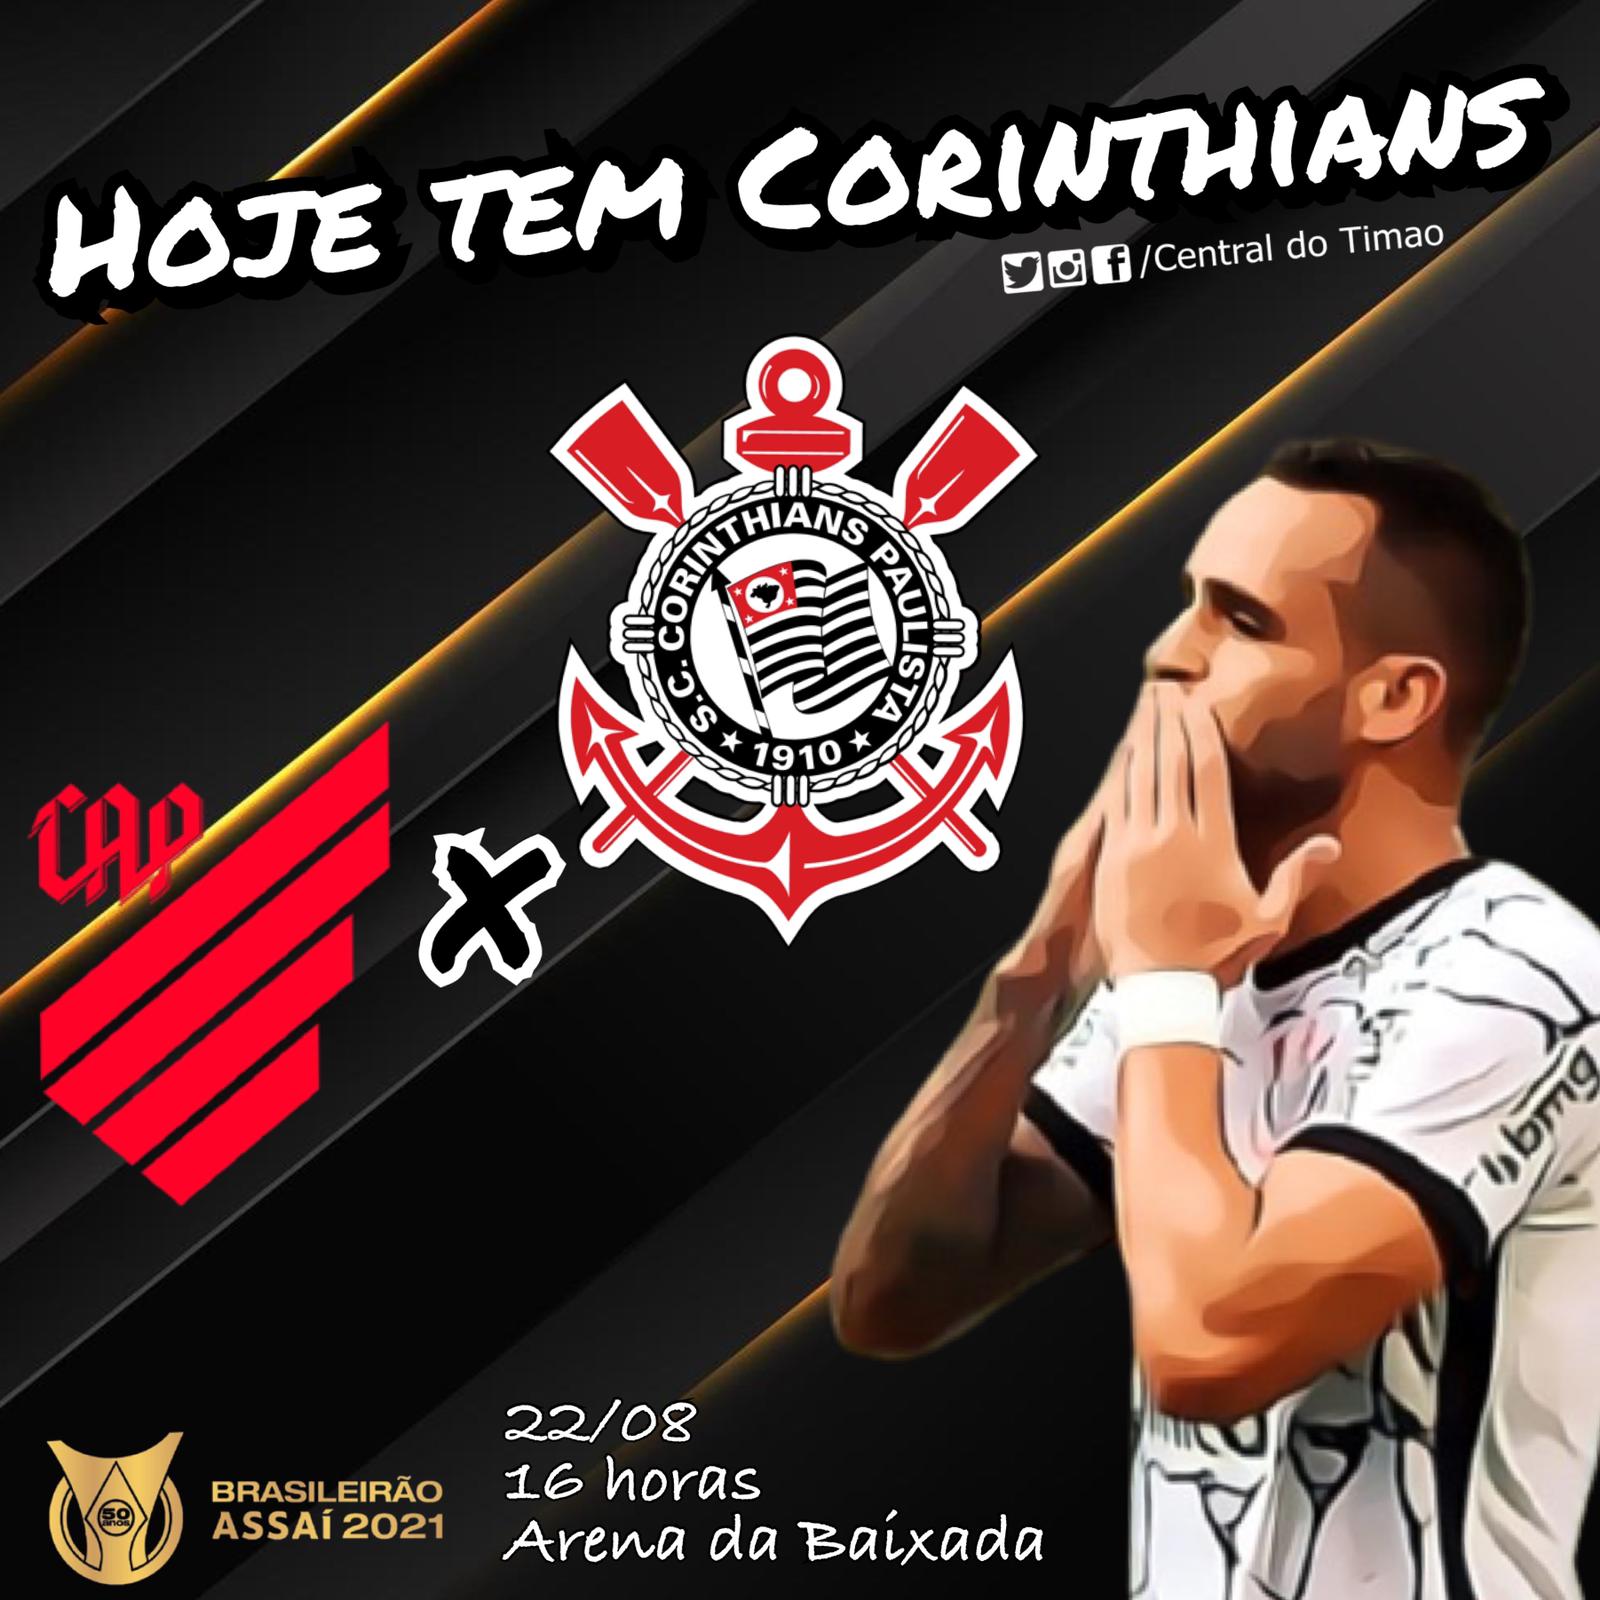 Hoje tem Corinthians, às 19horas !! 🦅 #HojeTemCorinthians #jogodocori